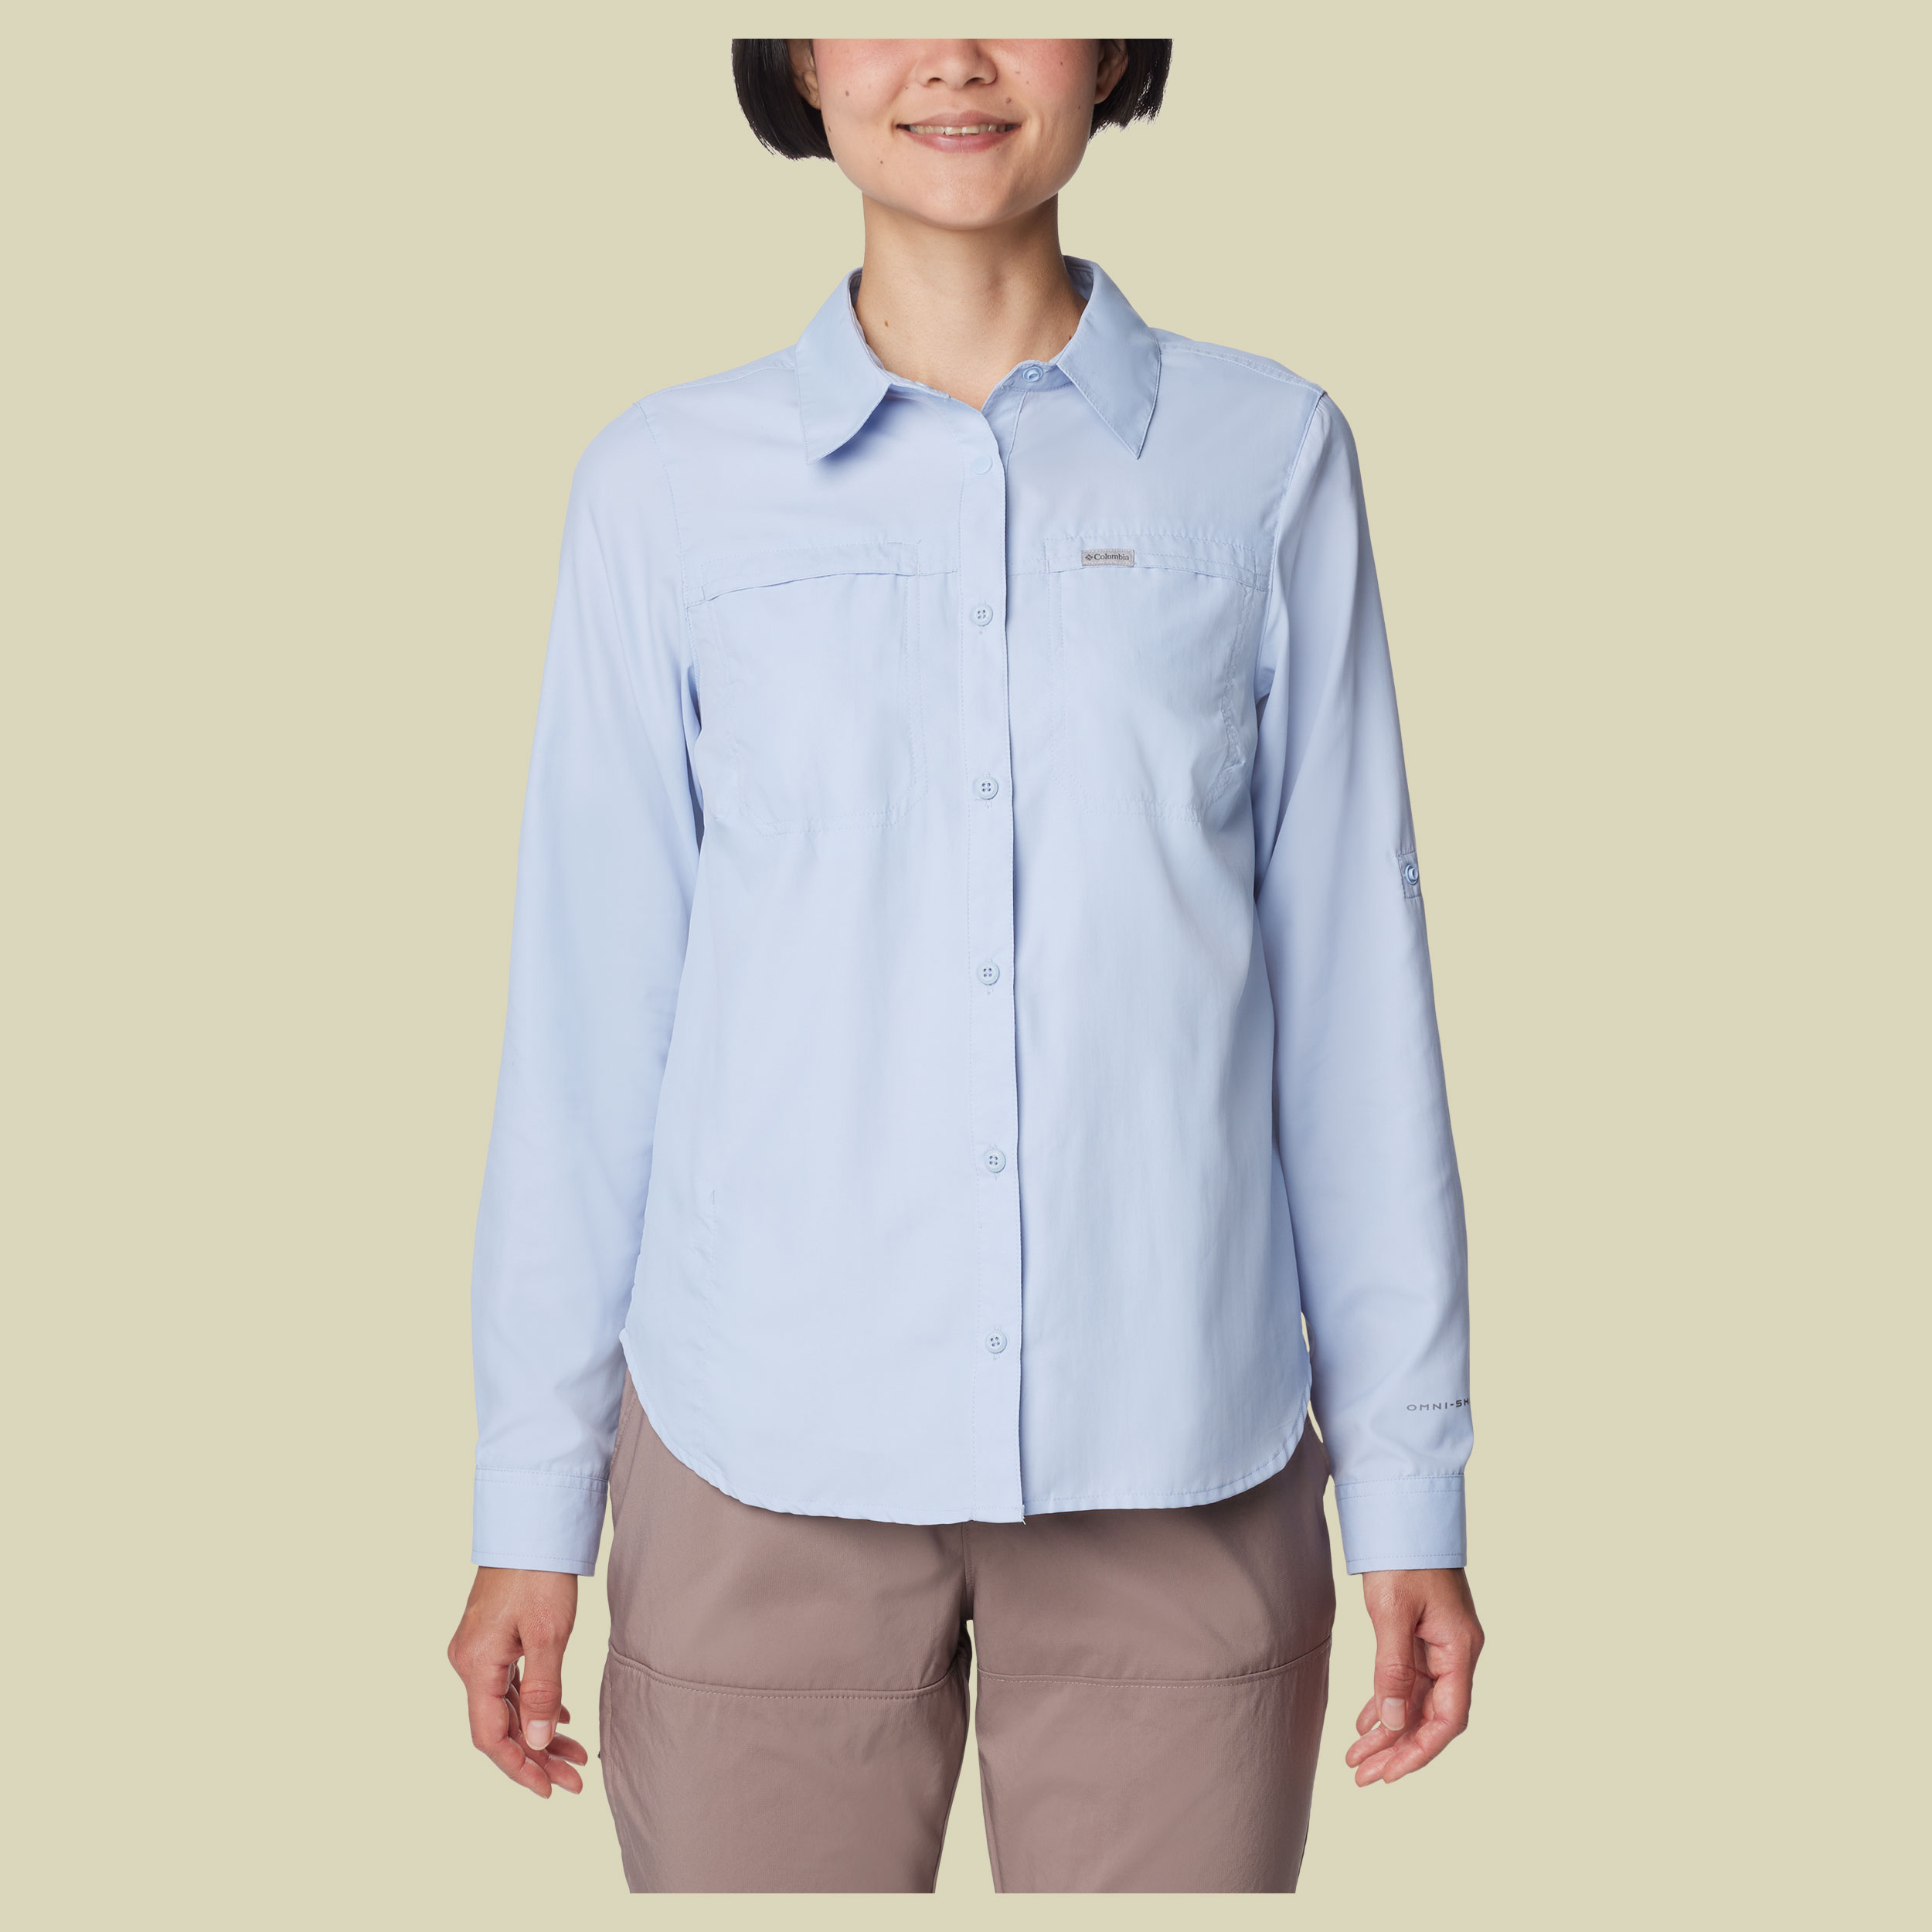 Silver Ridge 3.0 EUR Long Sleeve Shirt Women Größe L  Farbe whisper